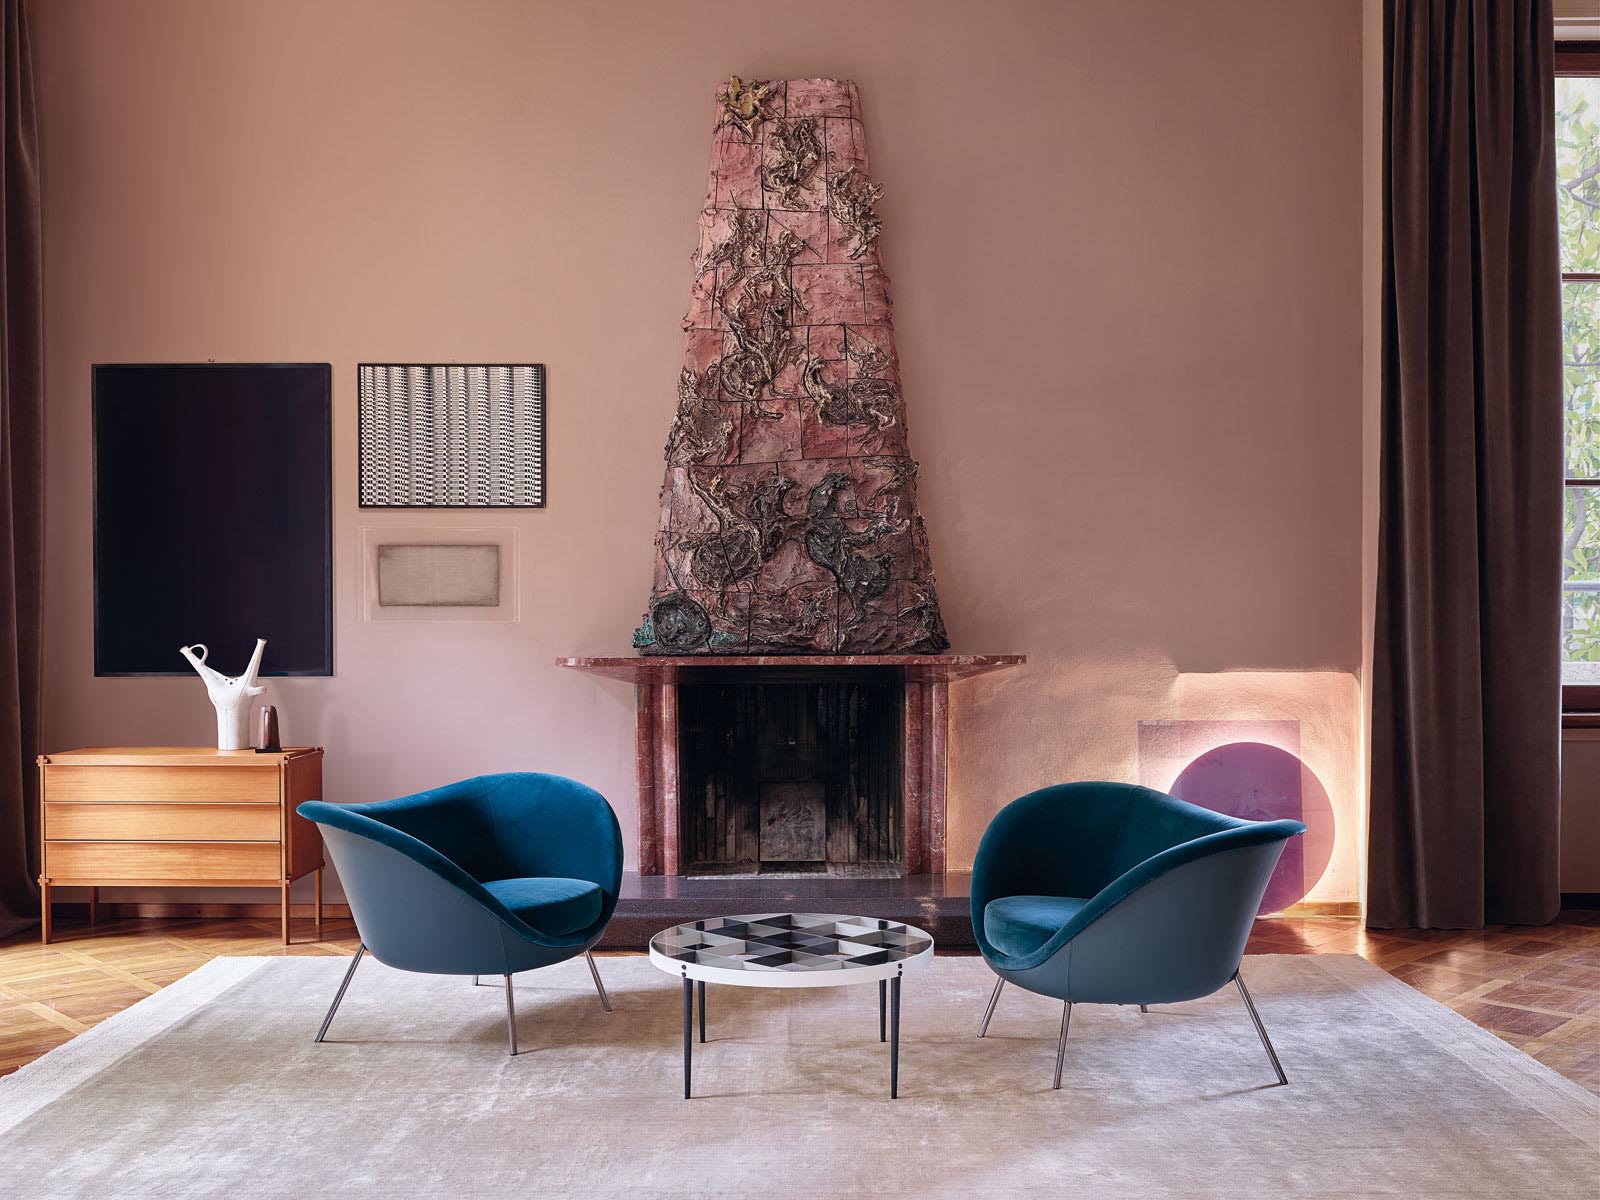 Modern living room furniture designs from Italian company Molteni&C.